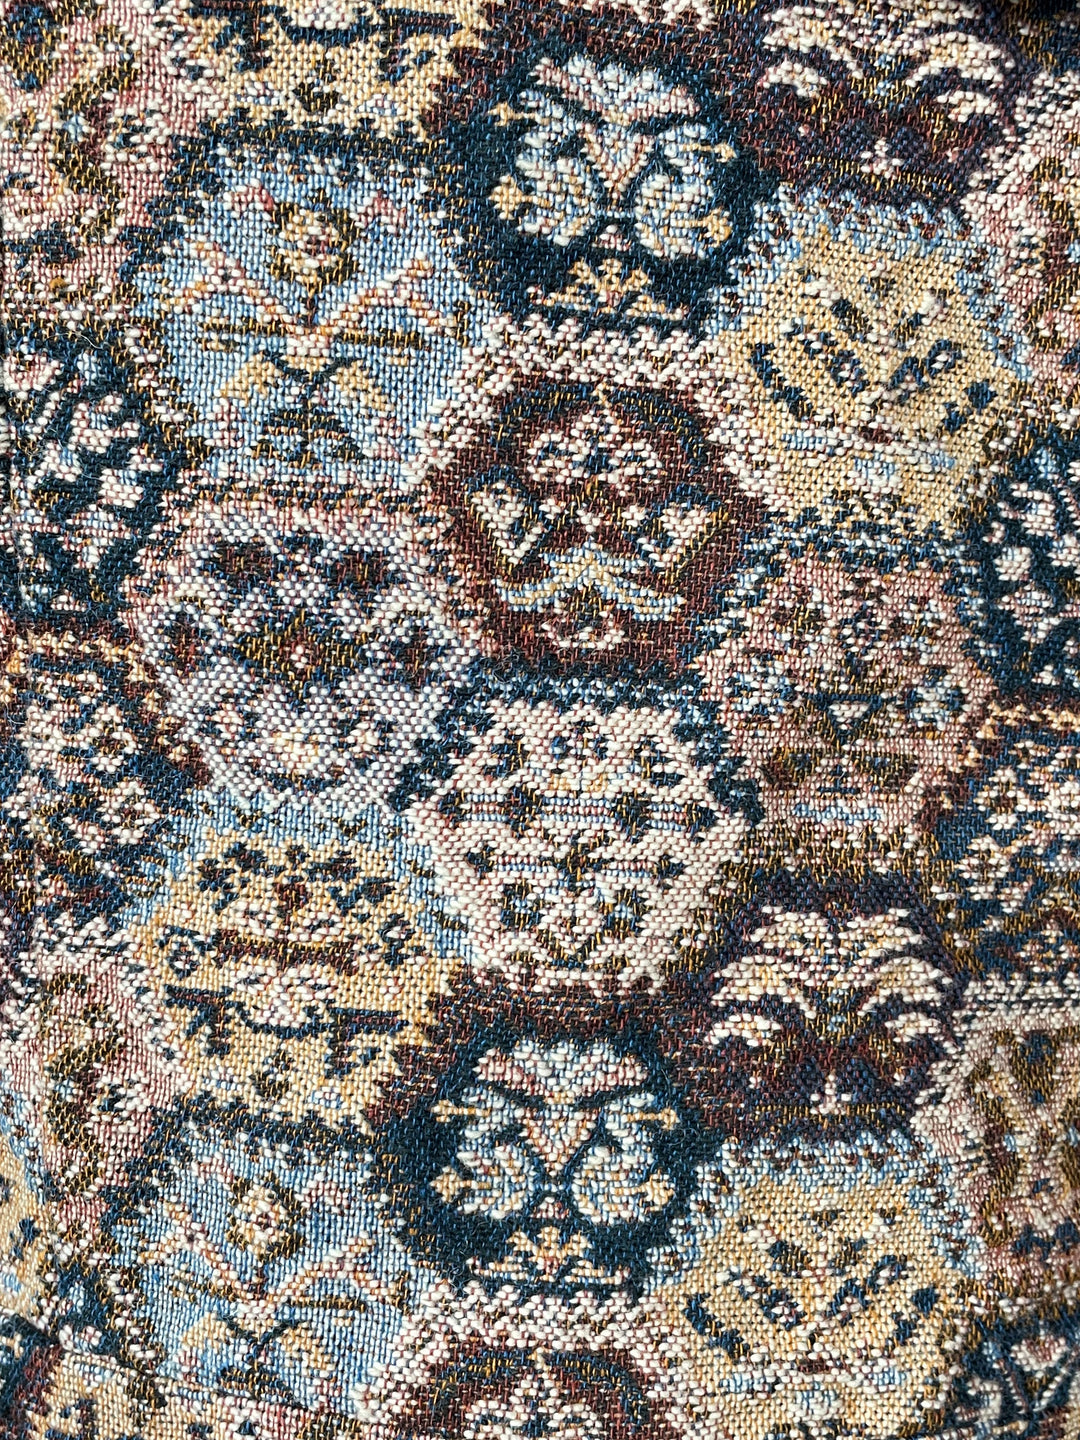 The Hexagon Tapestry 1970s Coat